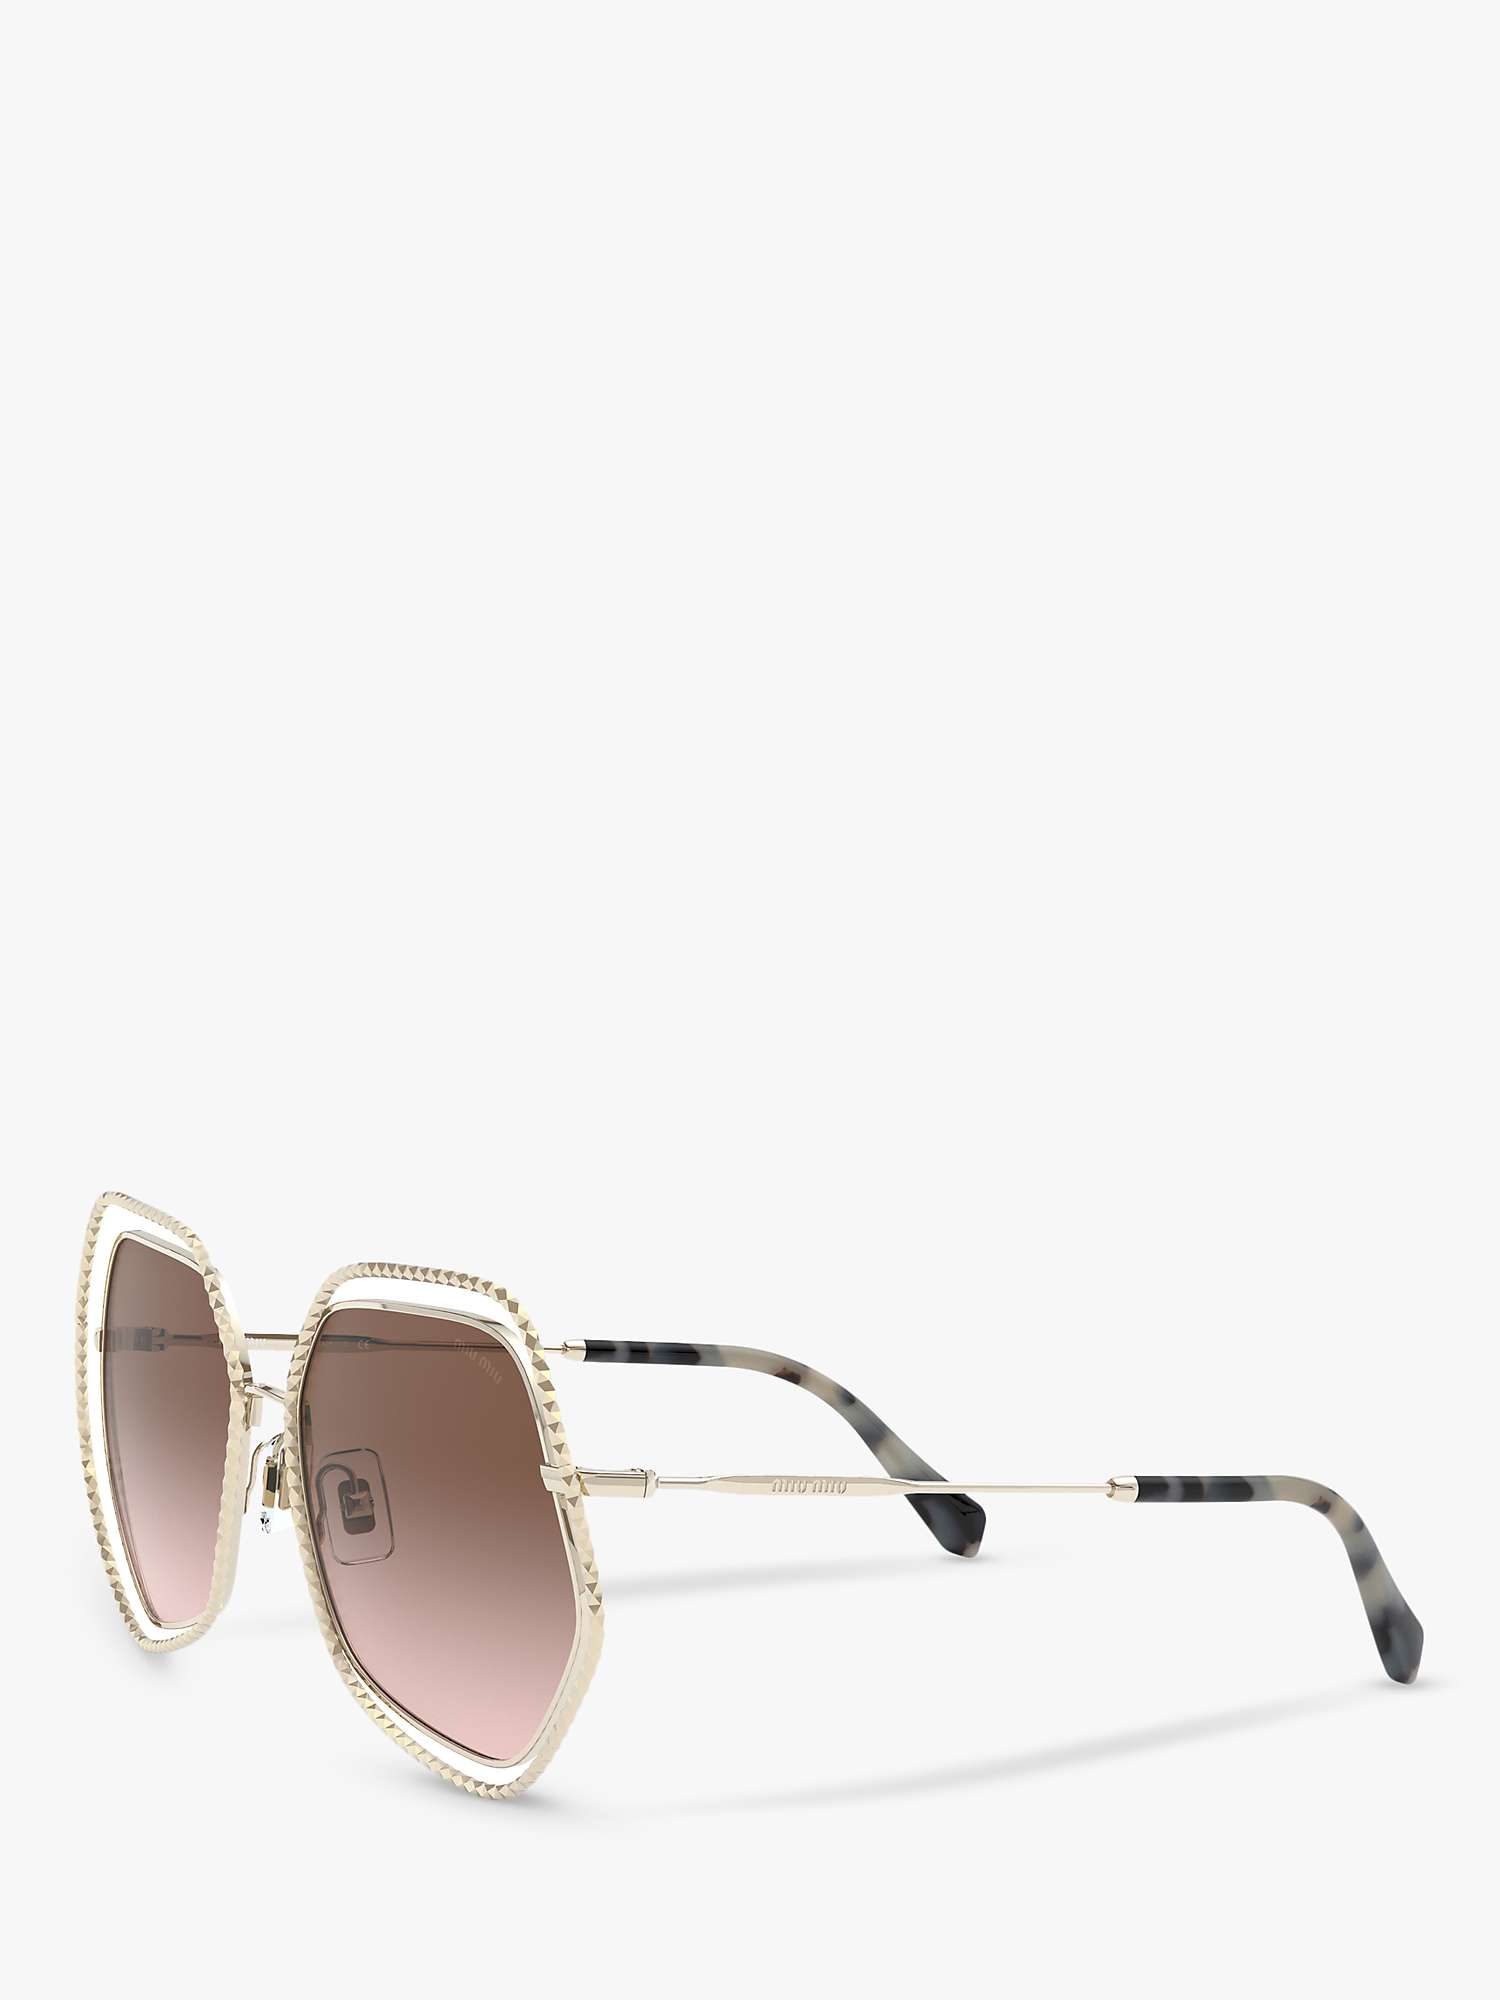 Buy Miu Miu MU 58VS Women's Irregular Sunglasses Online at johnlewis.com